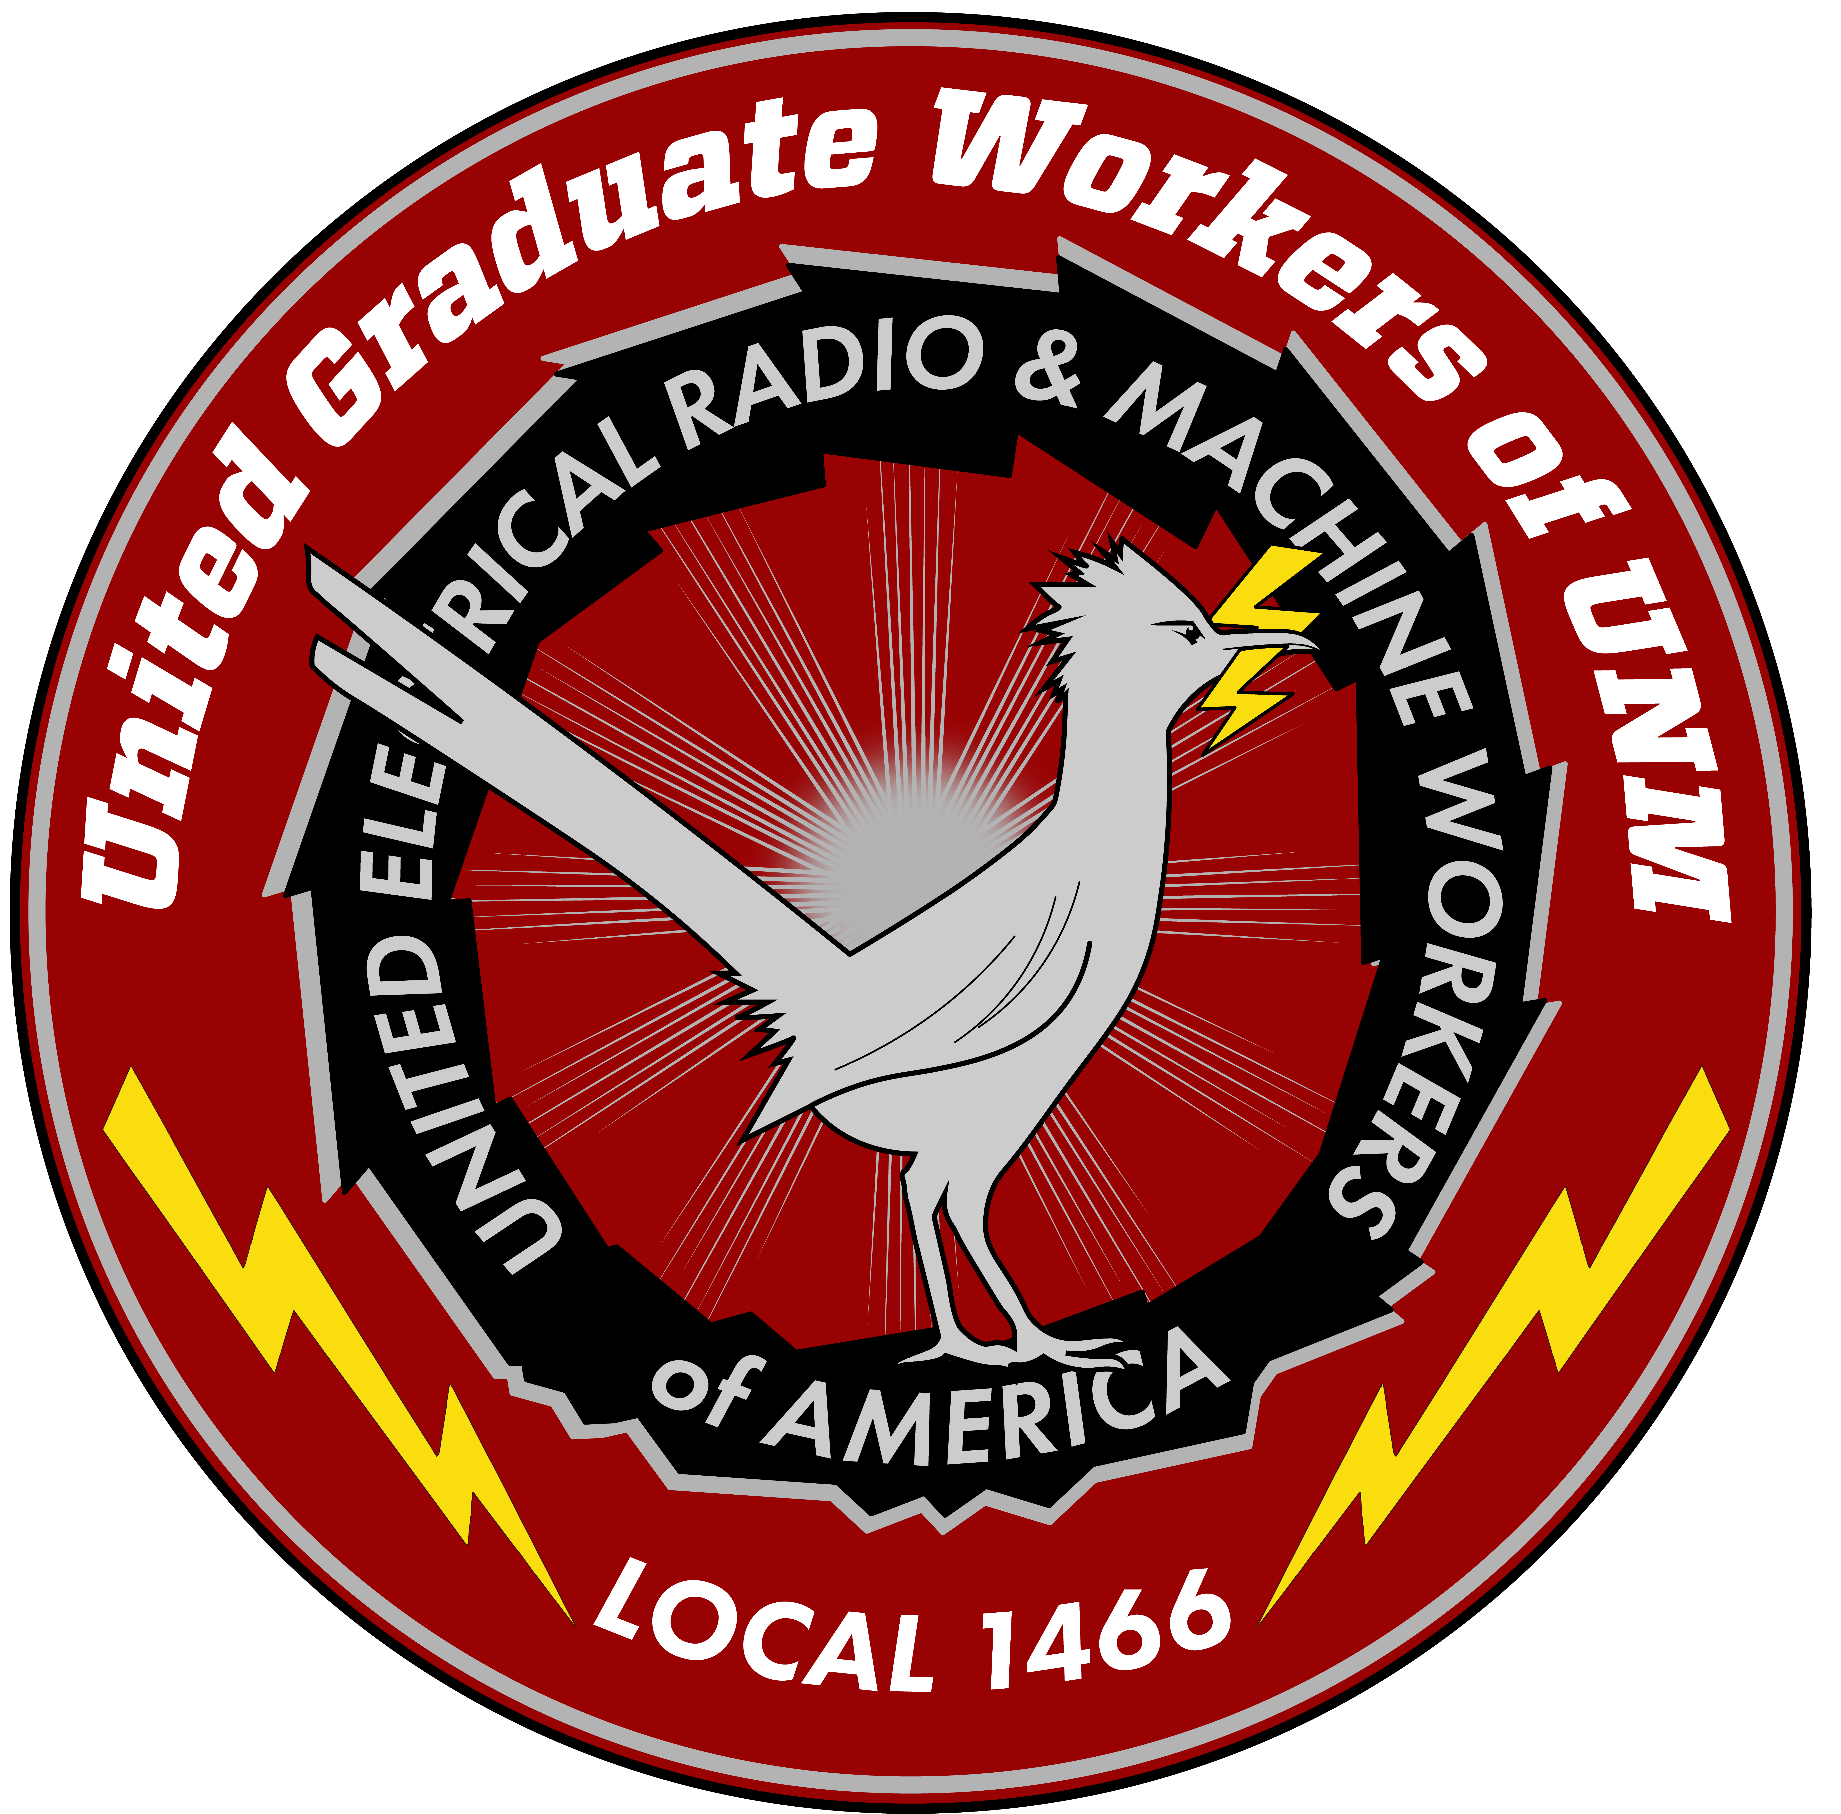 United Graduate Workers of UNM